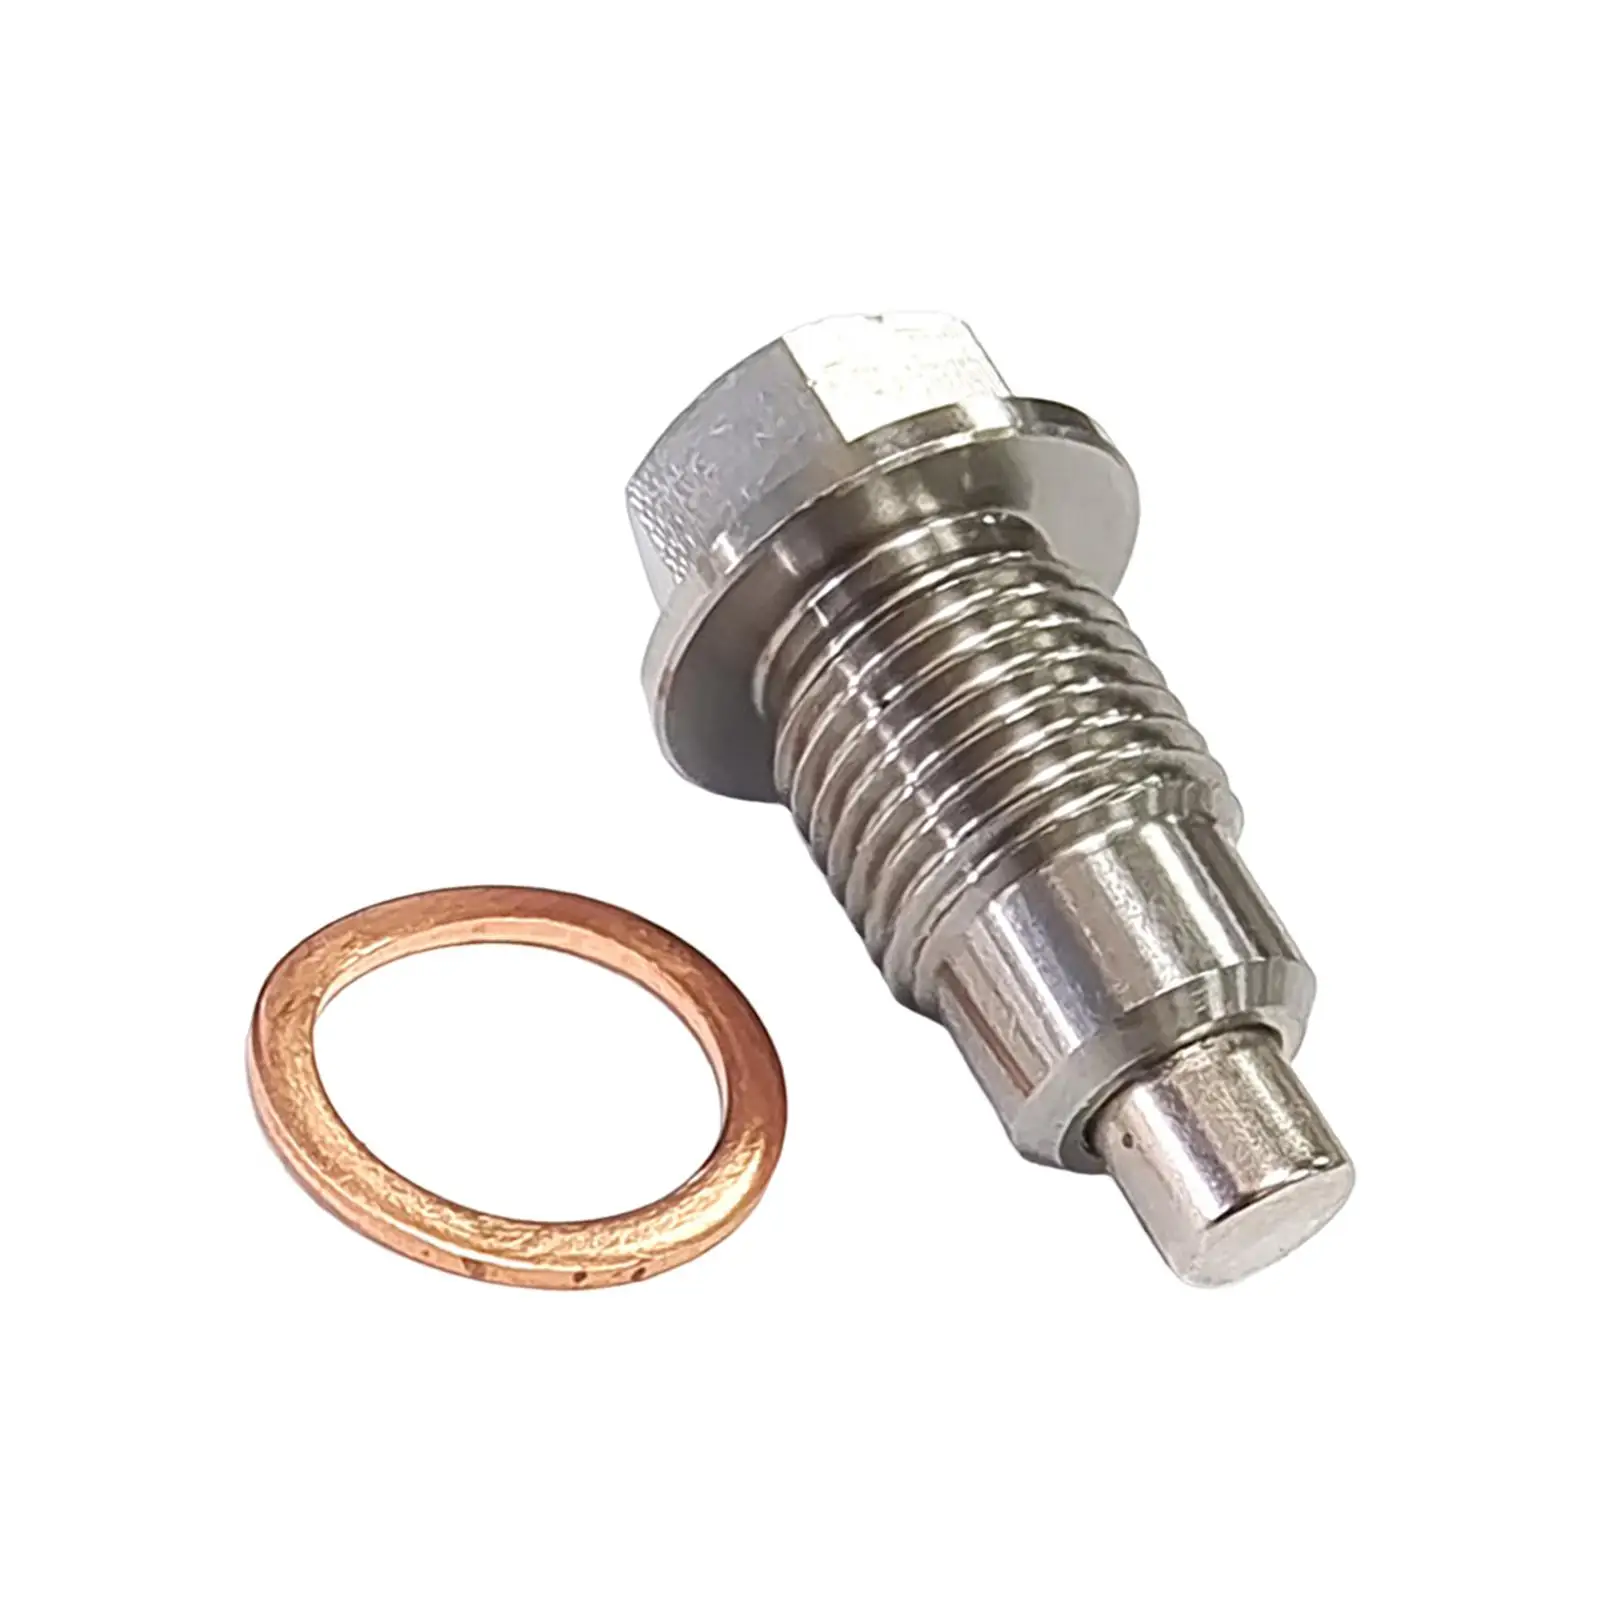 Oil Drain Plug Screw M12x1.25 Anti Leak with Cooper Washer Replace Accessory Sump Drain Nut Neodymium Magnet Bolt for Car